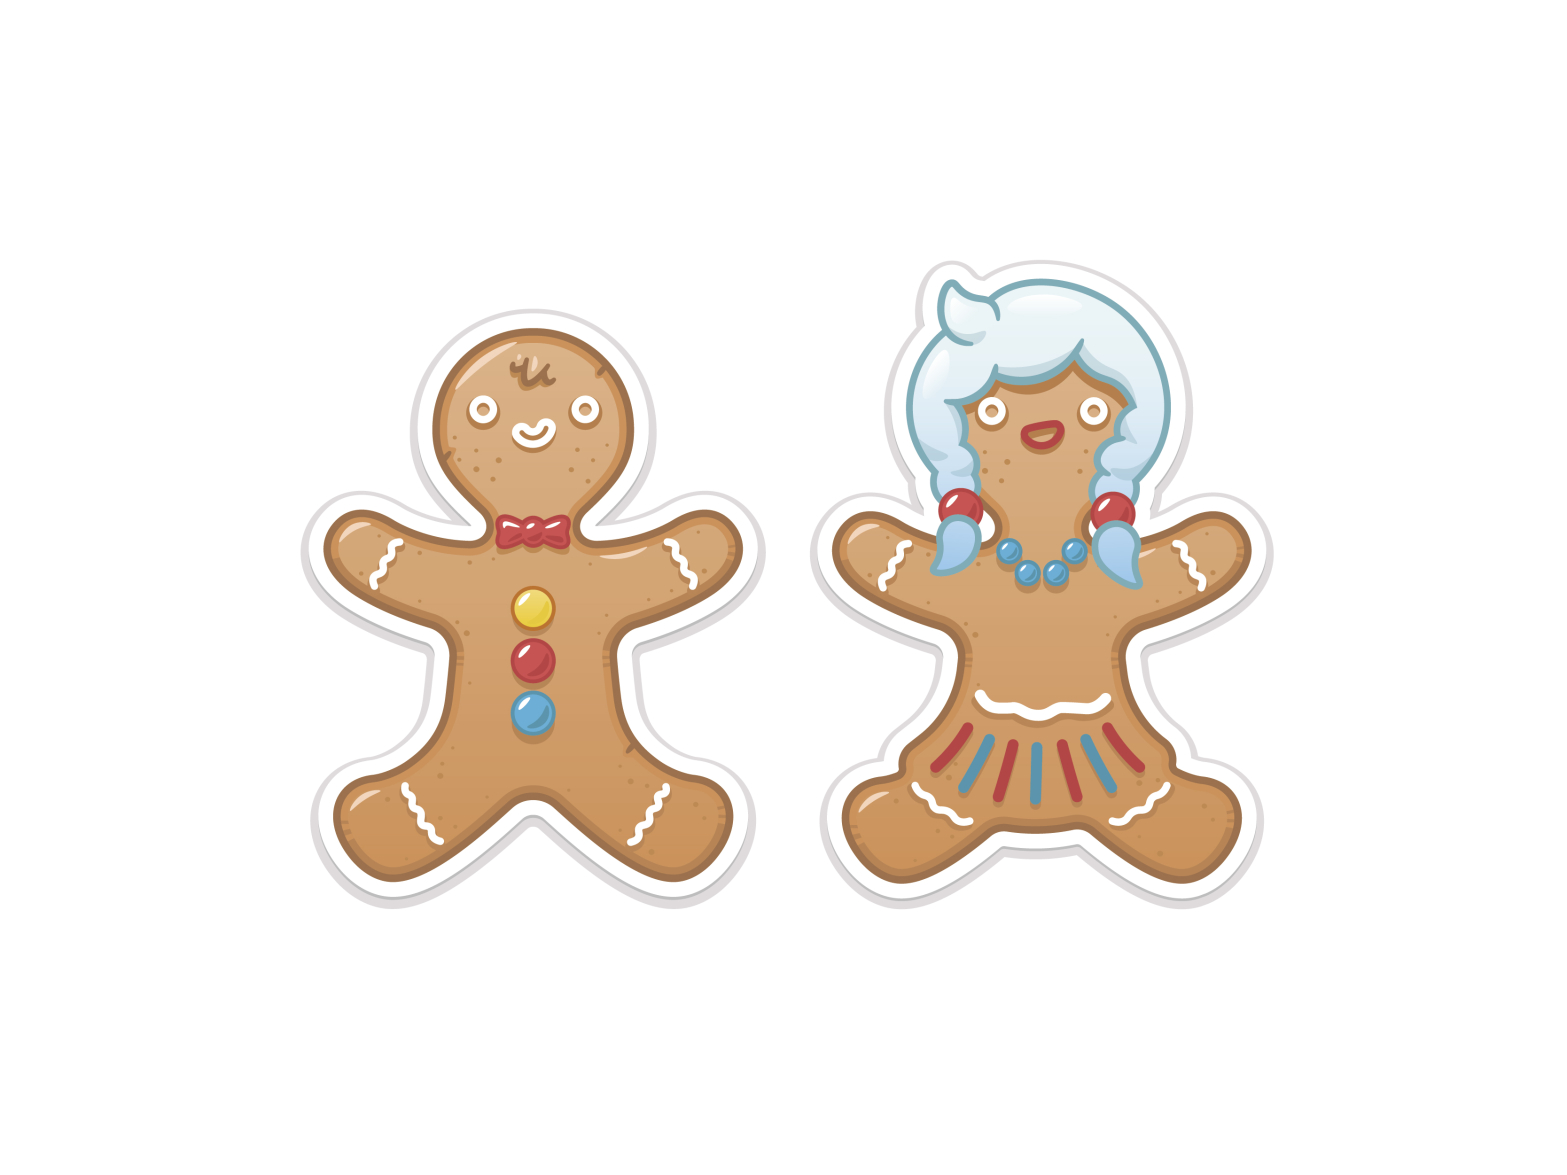 Gingerbread family by Sergey Darbaidze on Dribbble